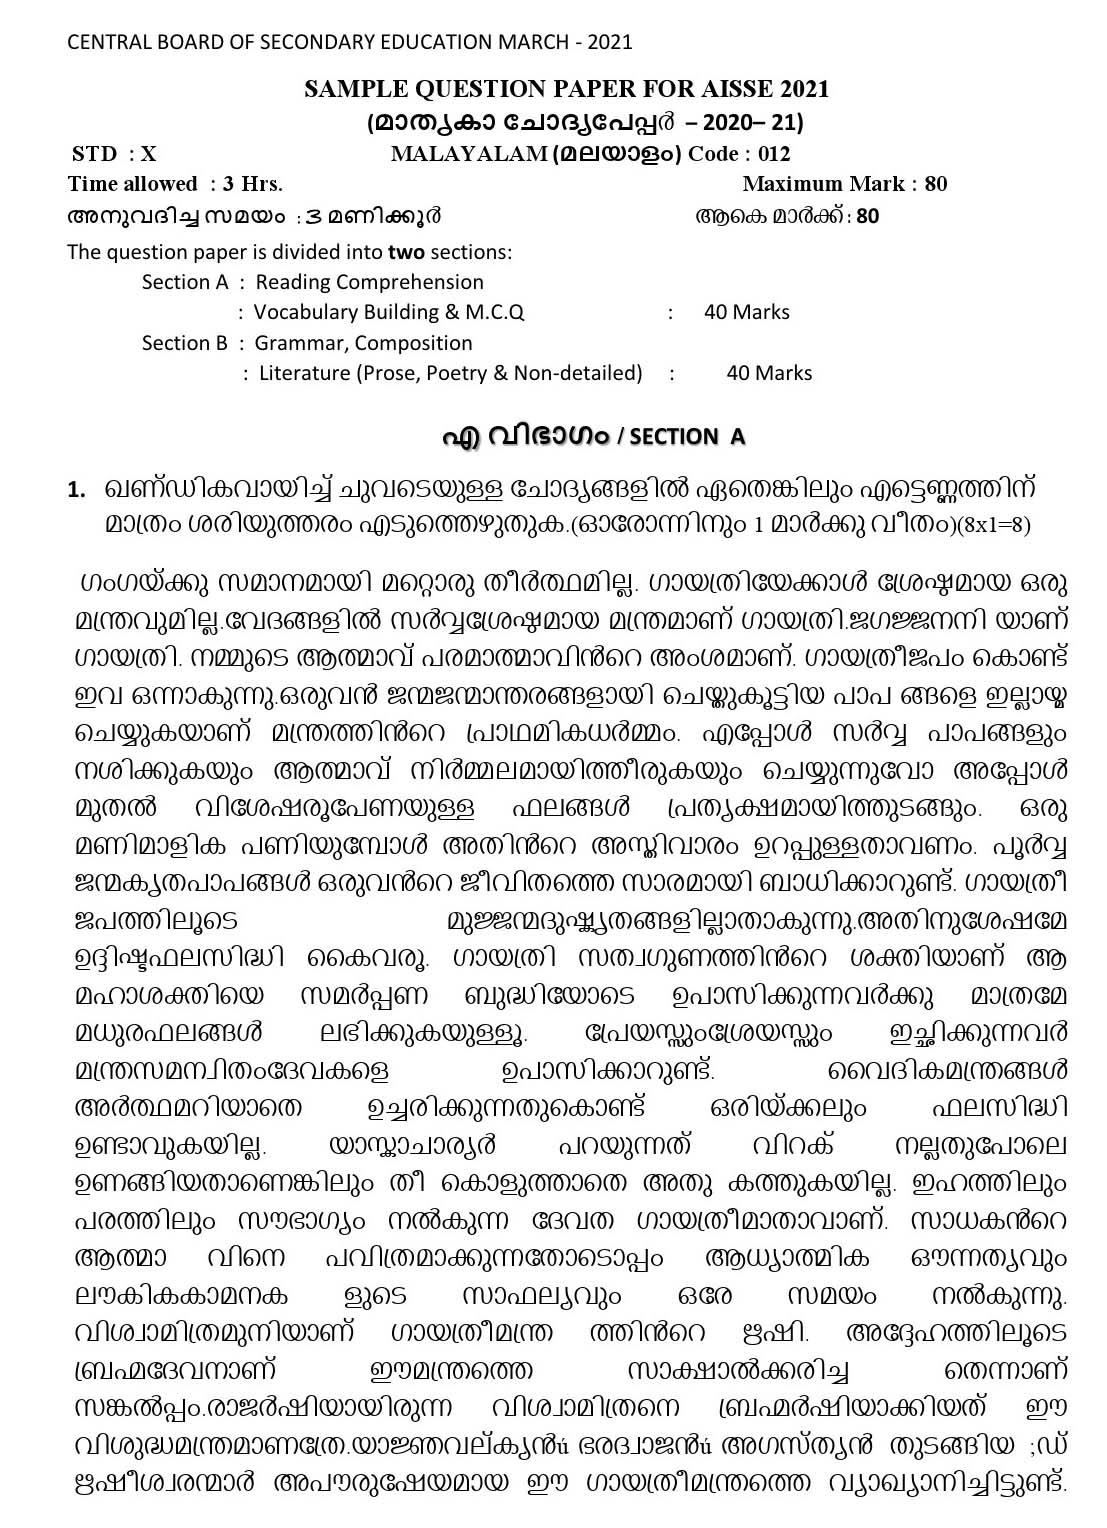 Malayalam CBSE Class X Sample Question Paper 2020 21 - Image 1